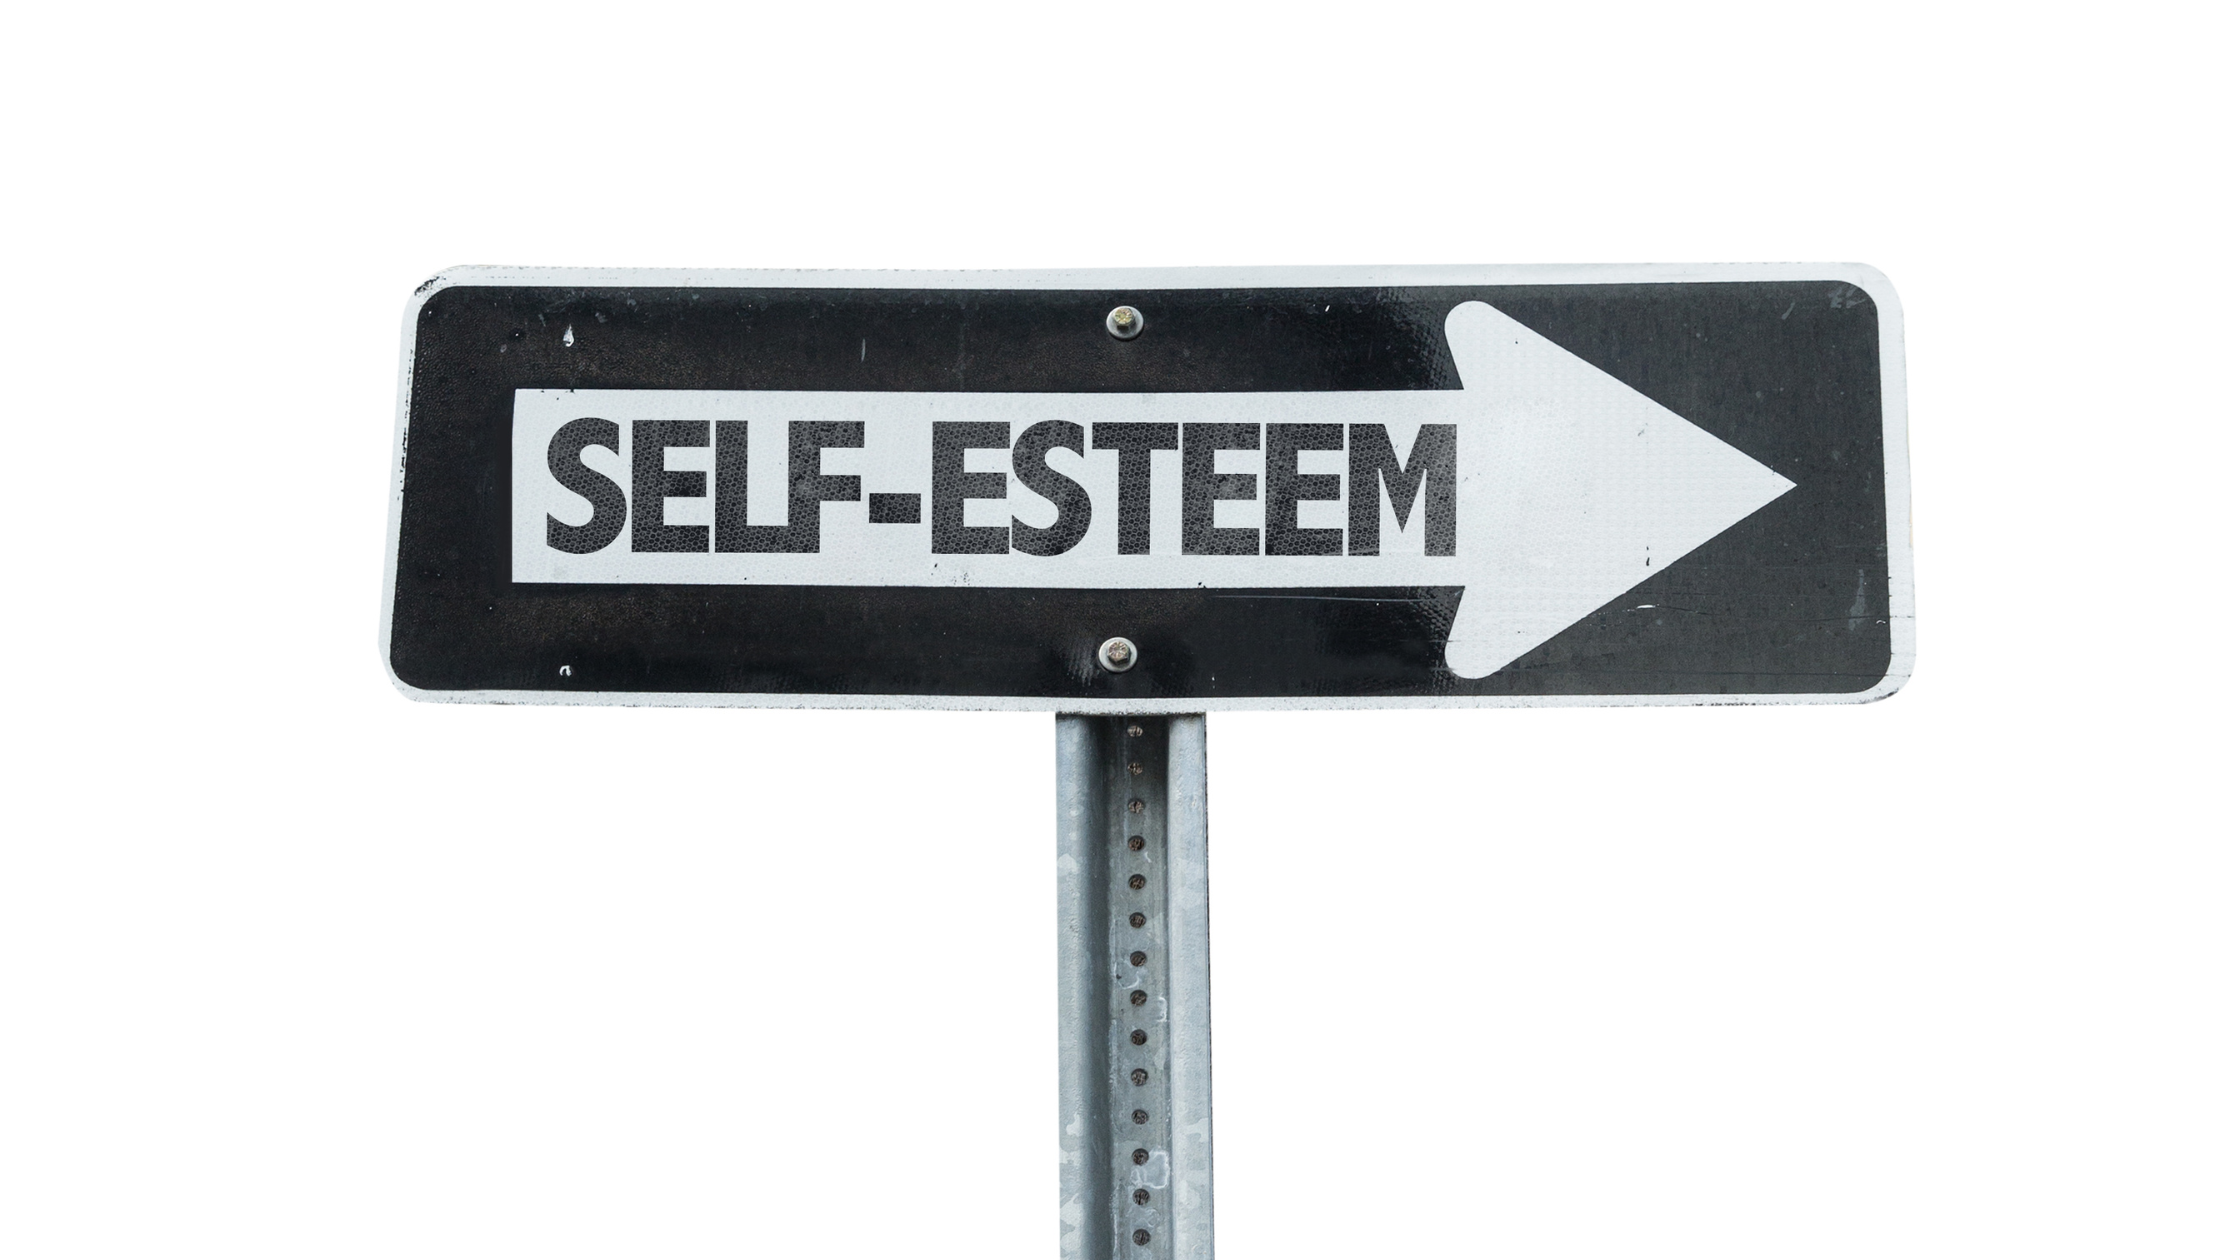 A post about self esteem